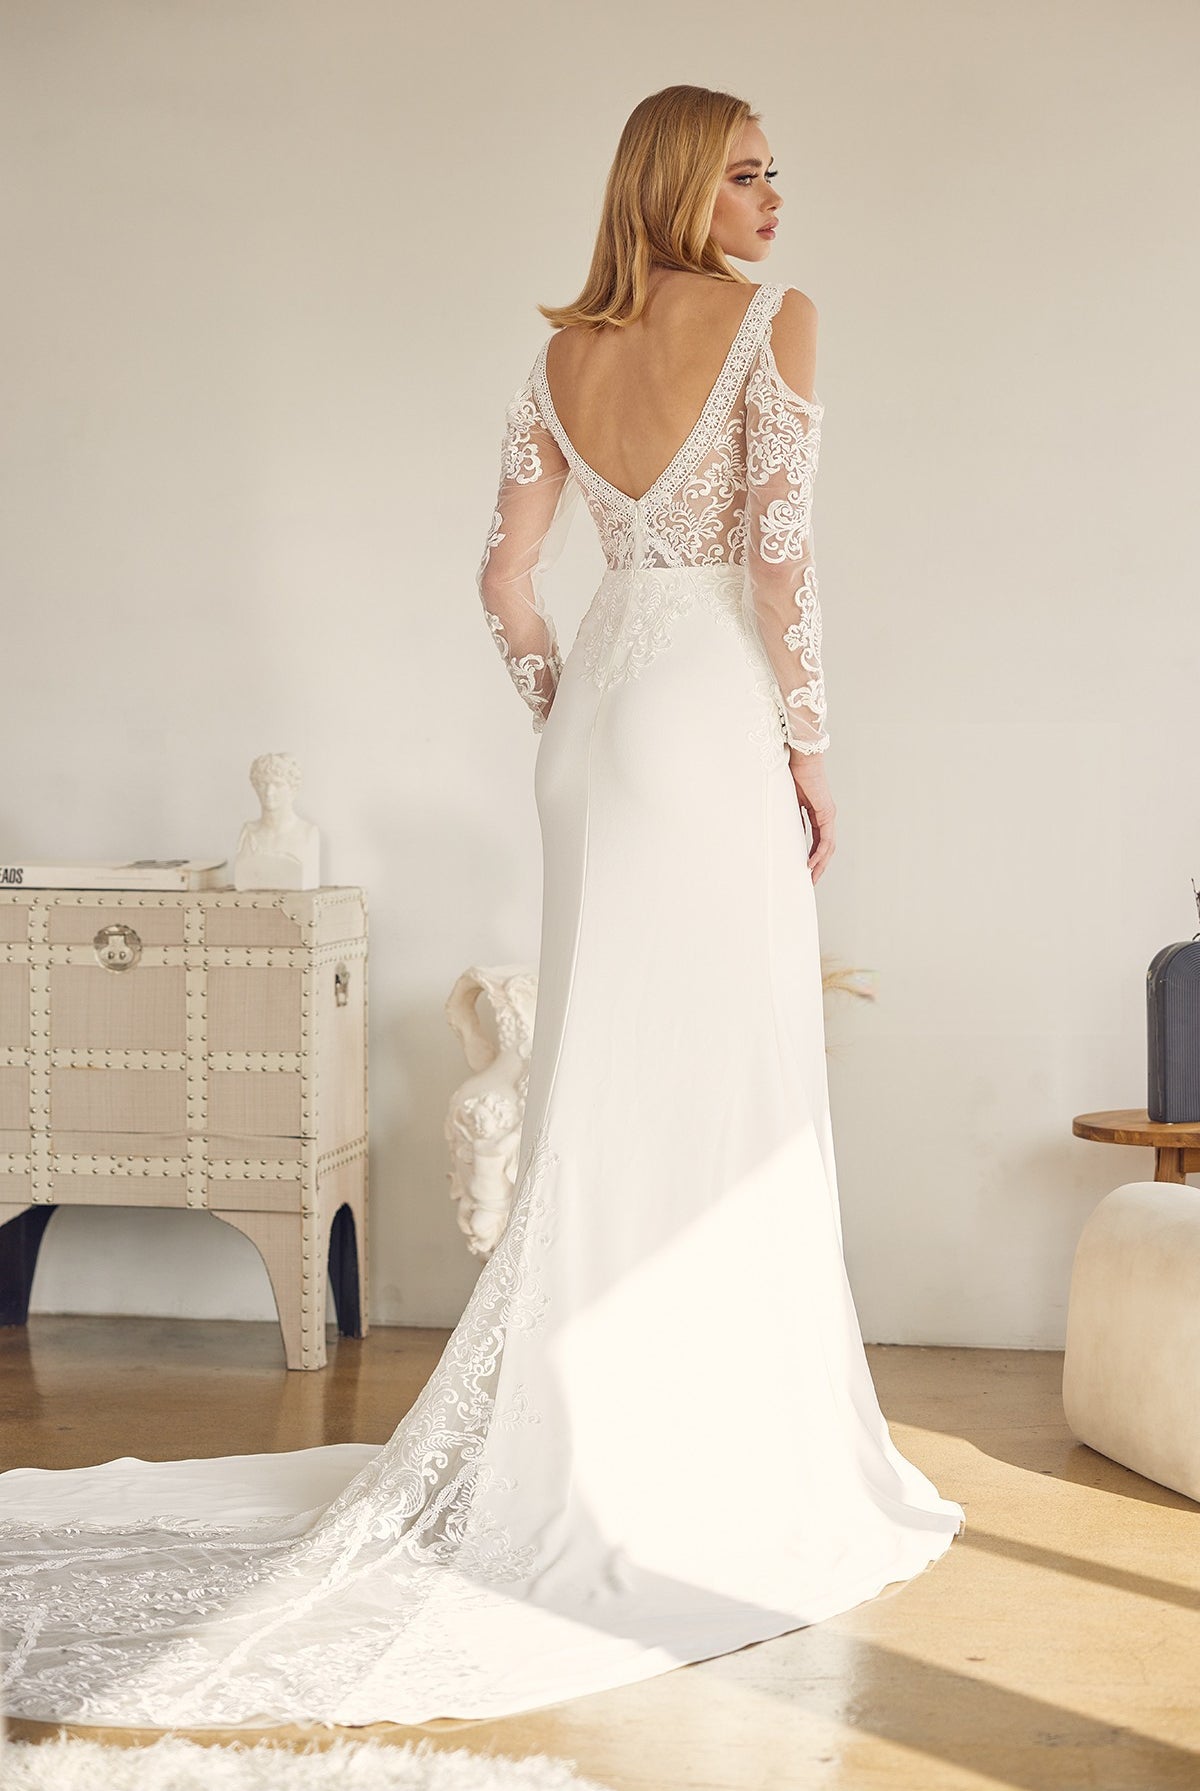 Embroidered Lace Illusion V-Neck Long Wedding Dress NXJE916-Wedding Dress-smcfashion.com